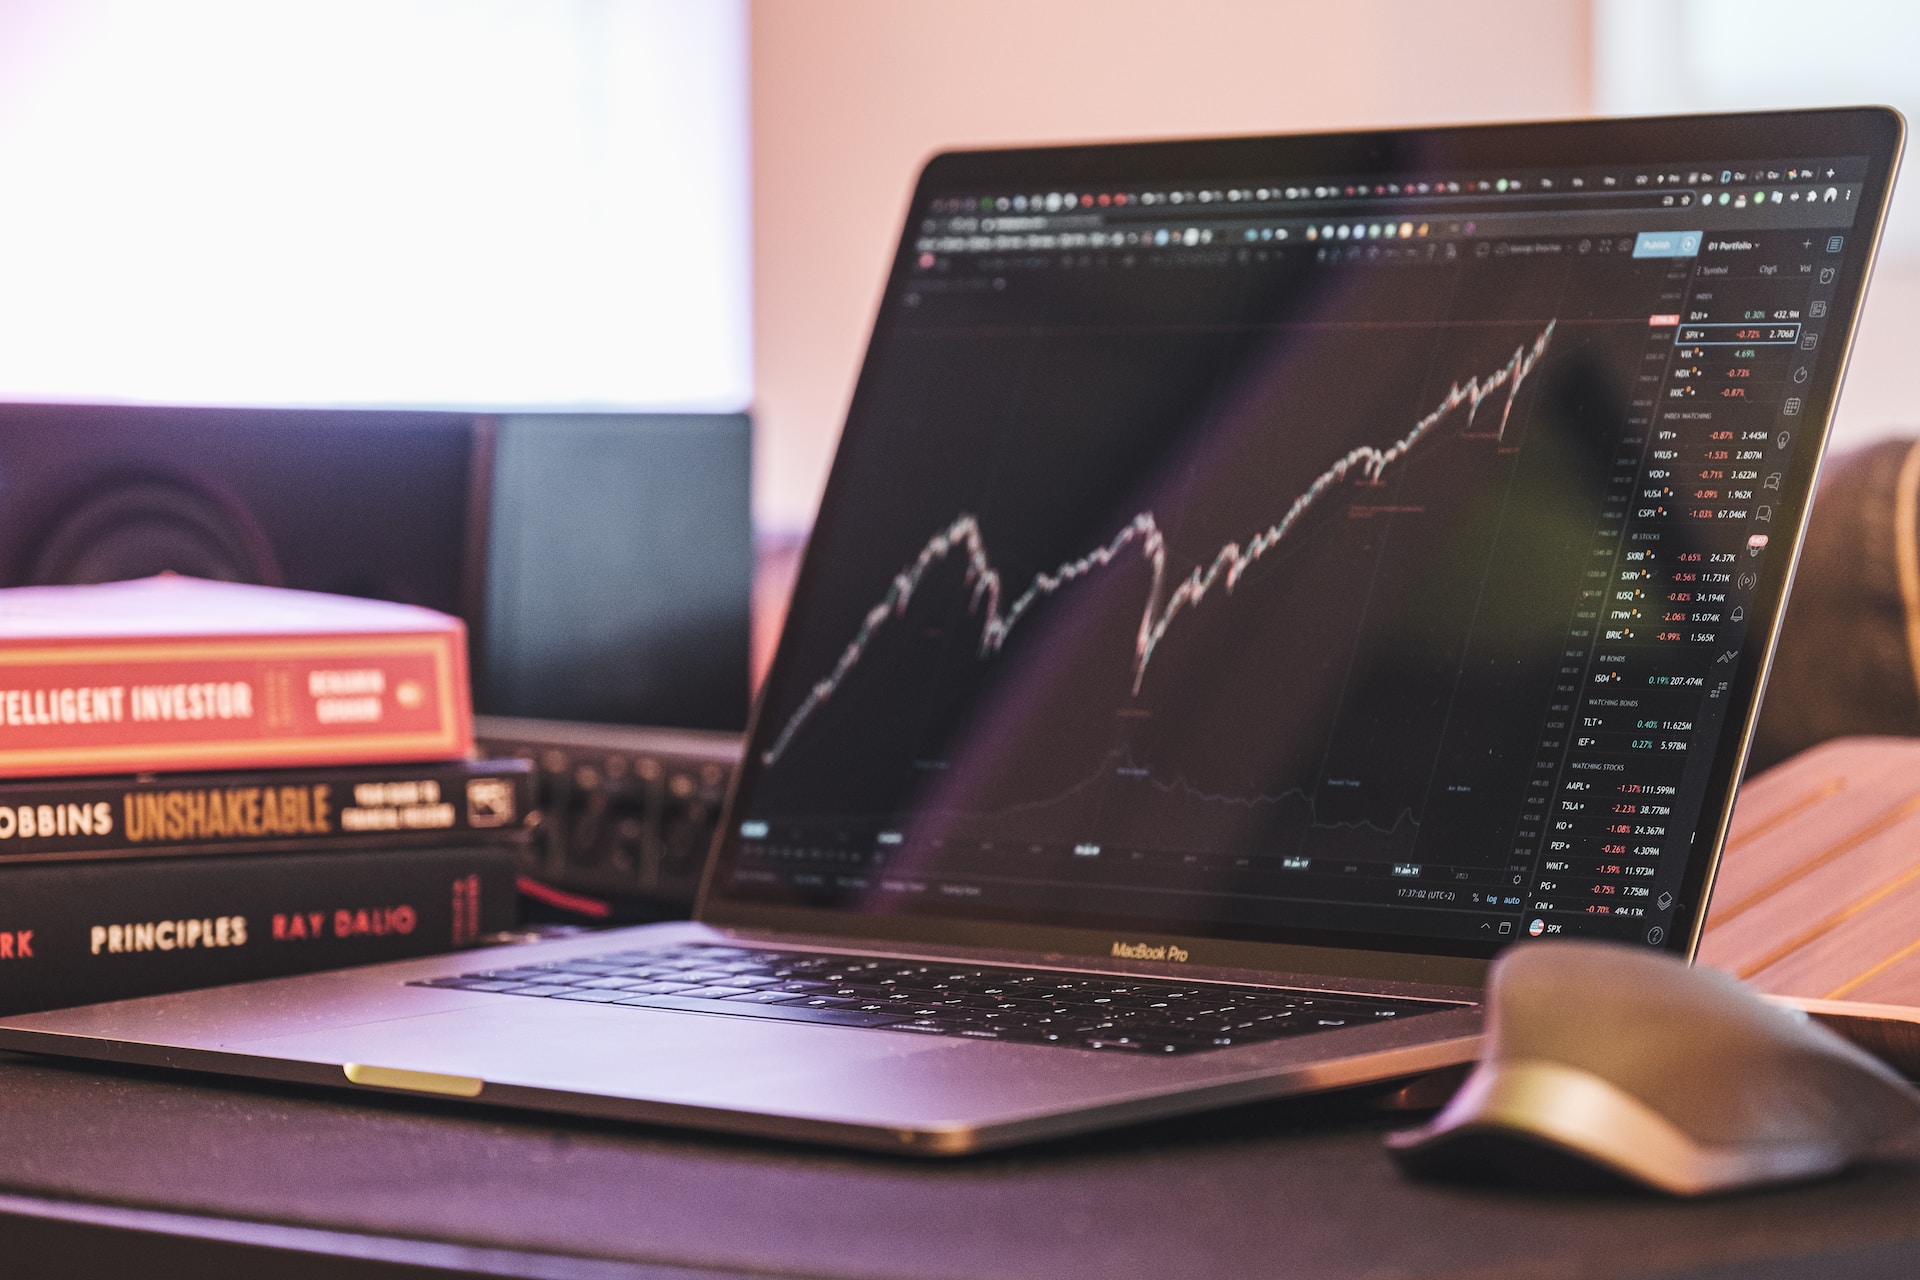 Expert analysis: effective flat trading strategies